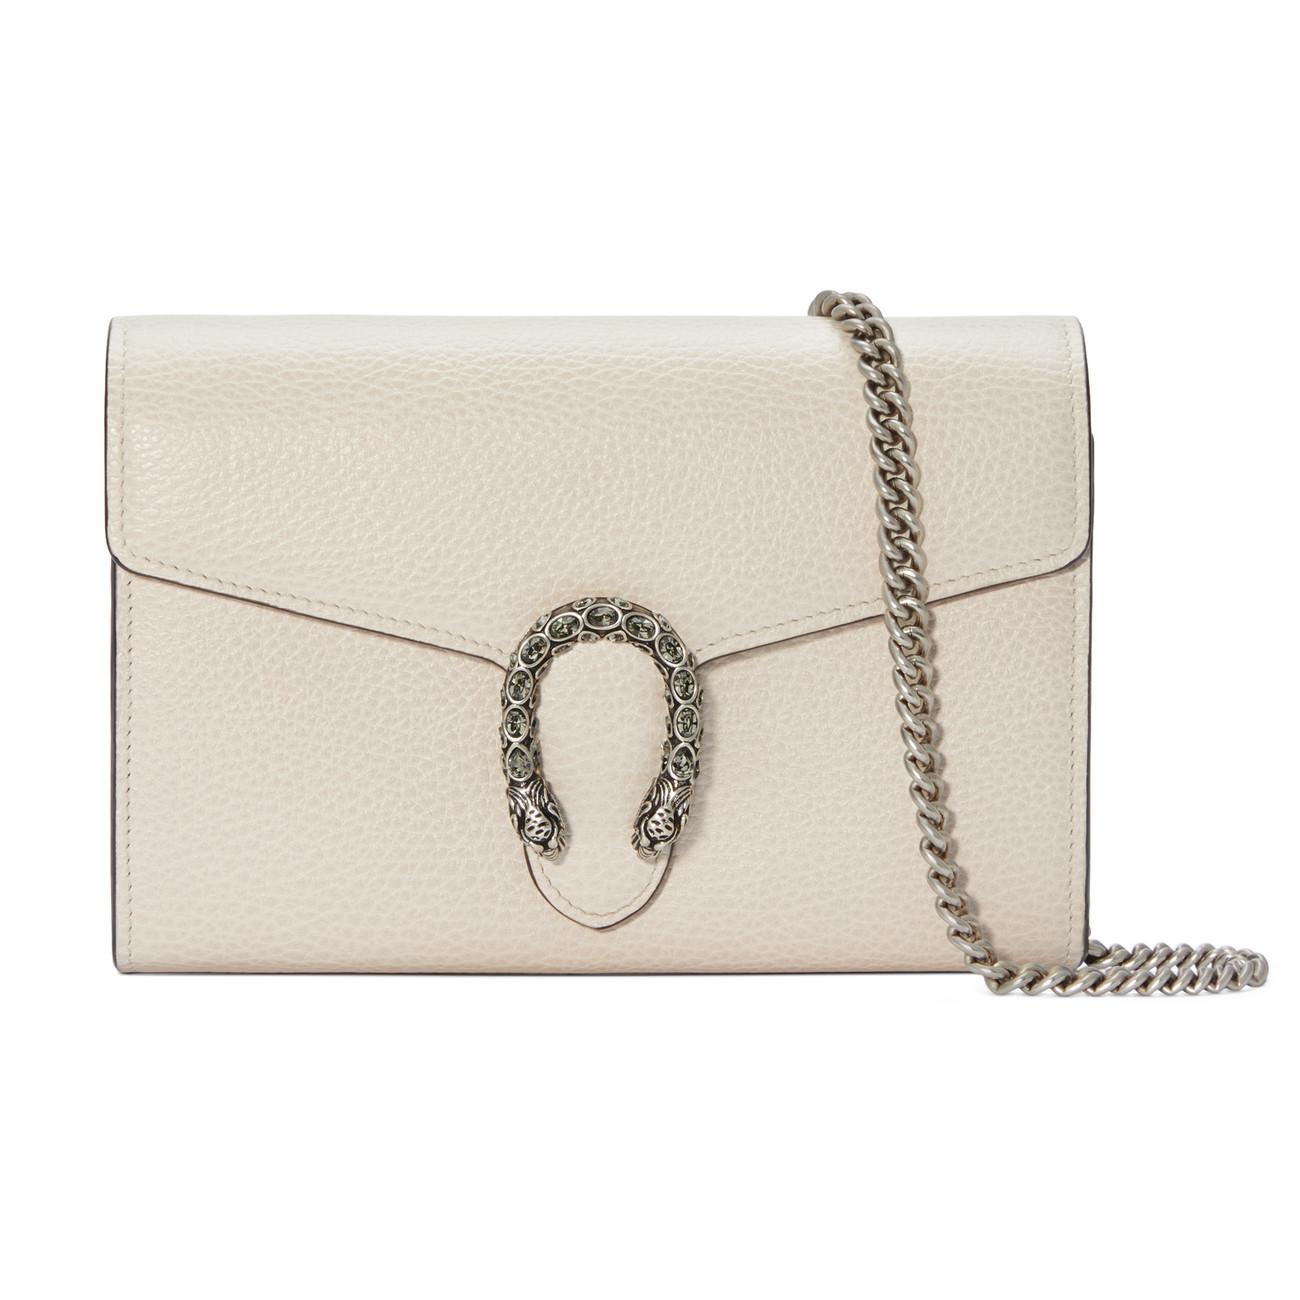 Lyst - Gucci Dionysus Mini Leather Chain Bag in White